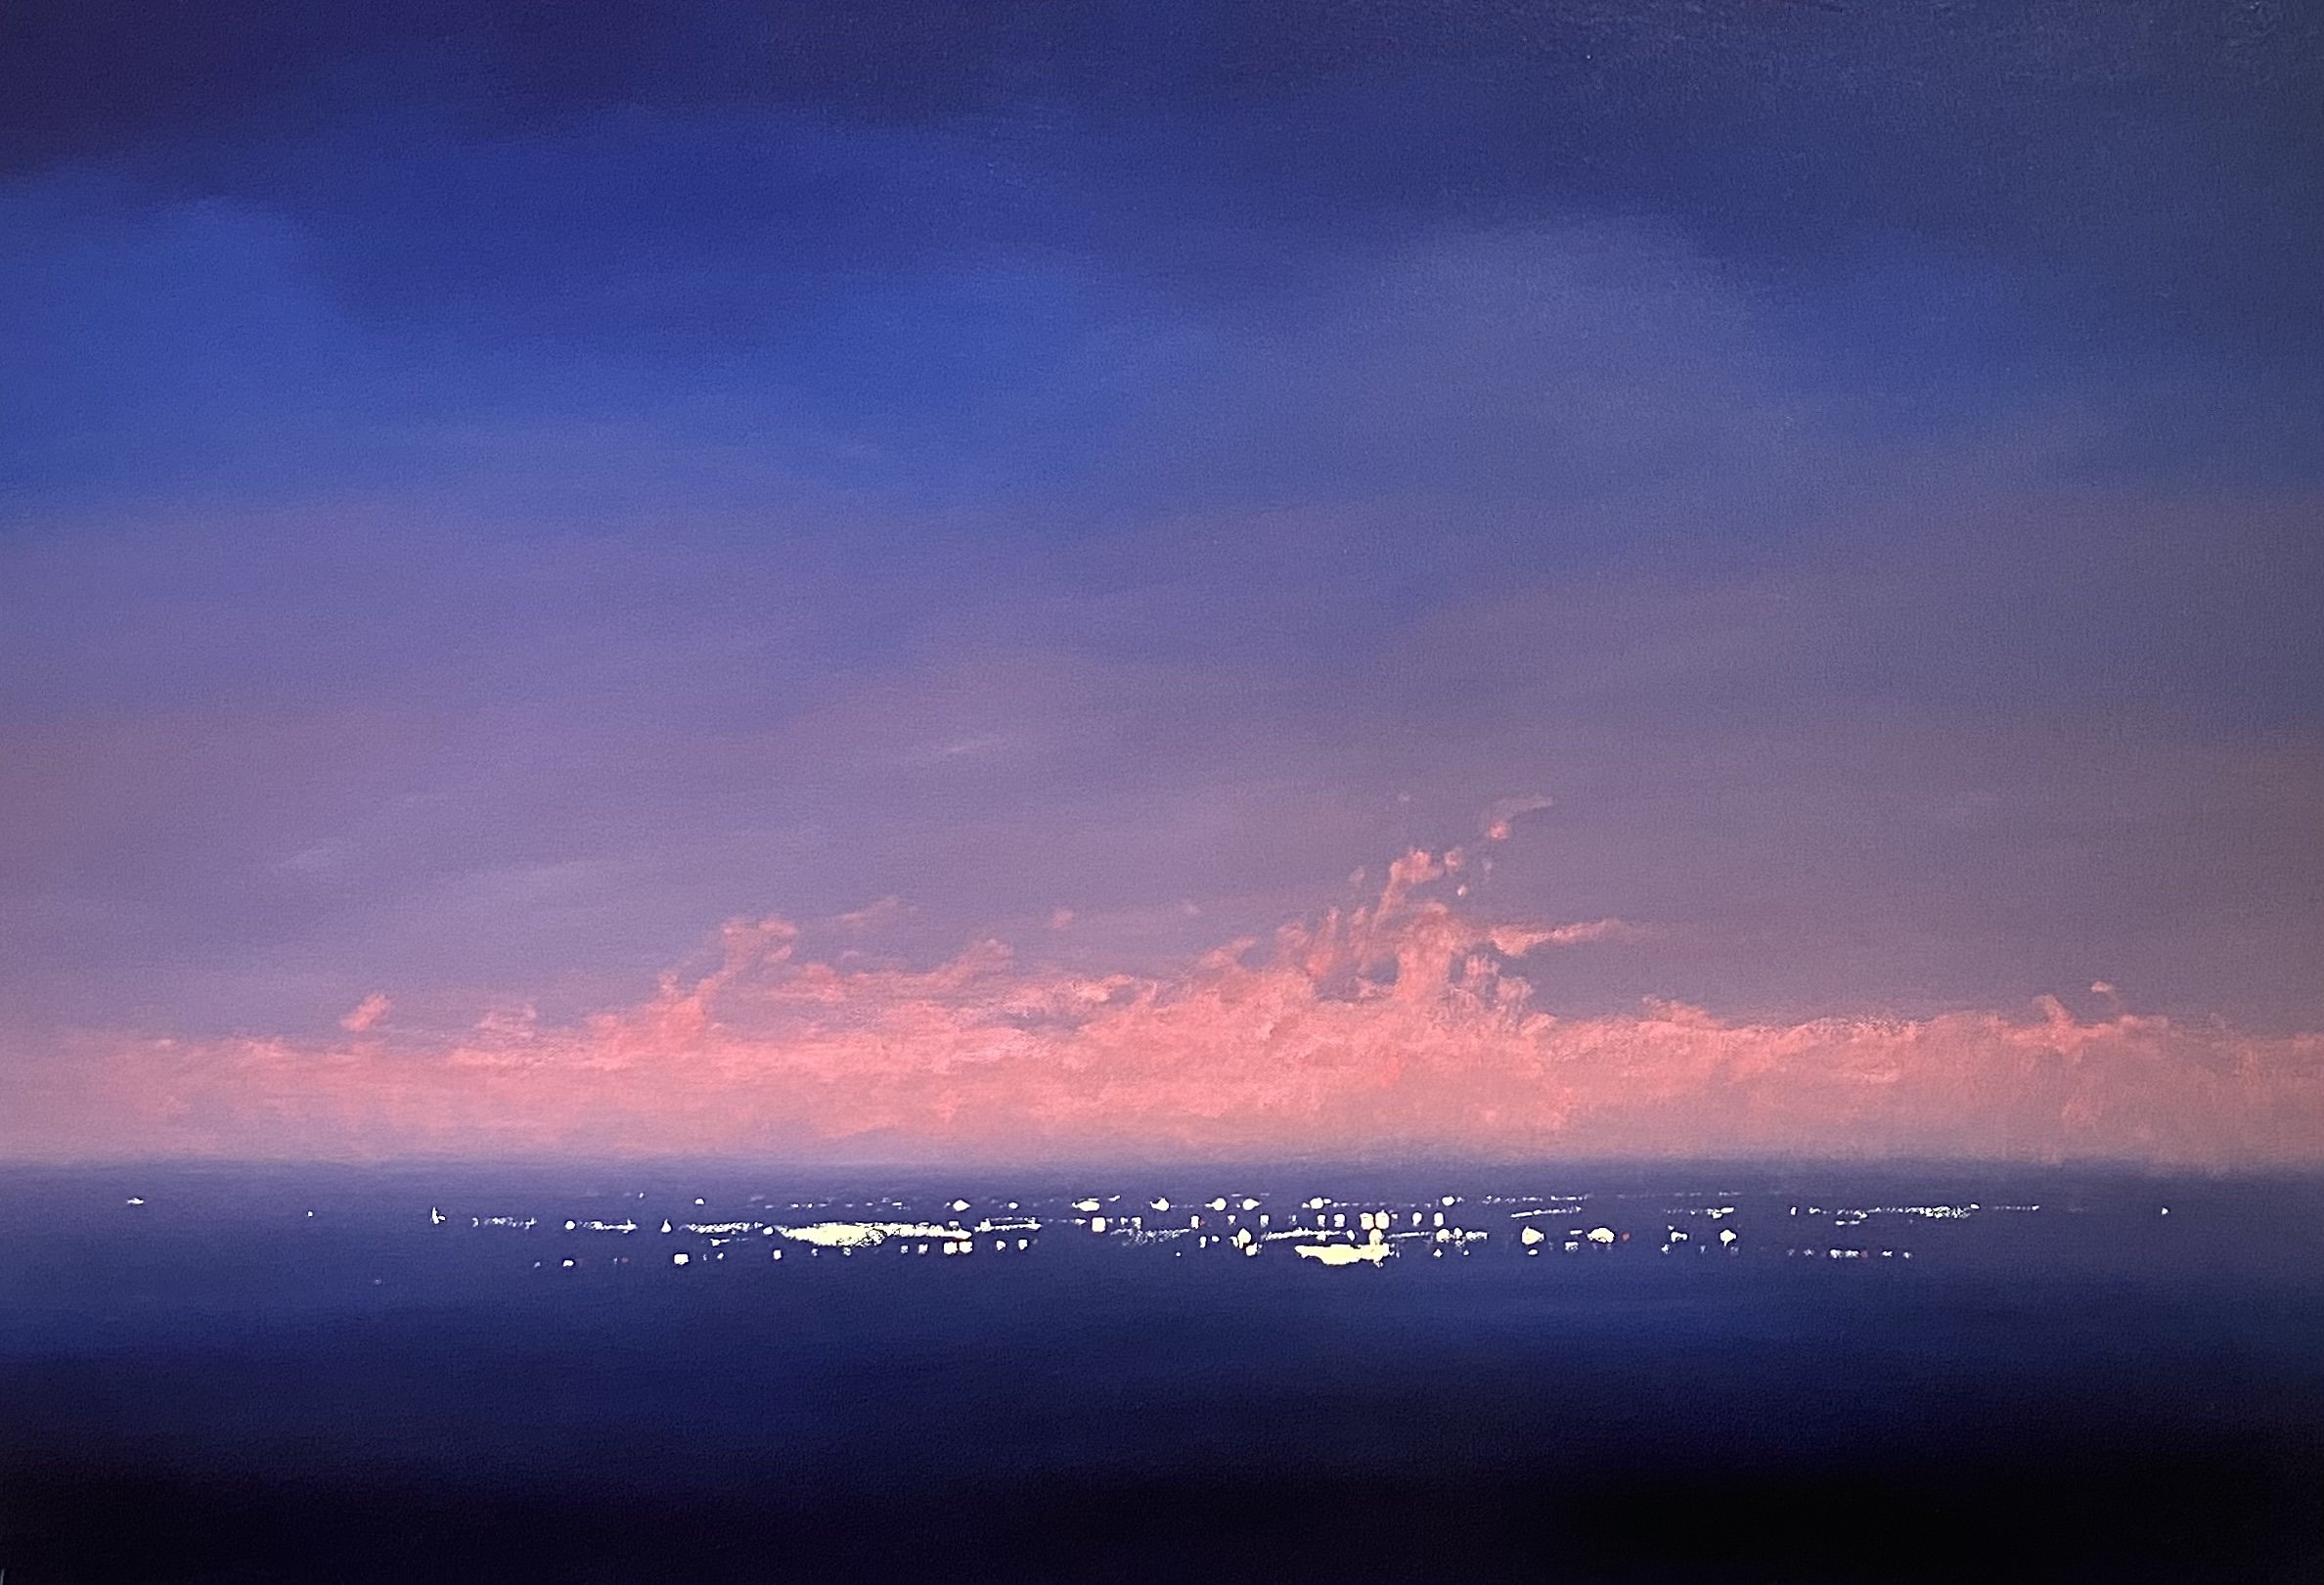 Wellings_Slowly into Nightfall_Oil on Canvas_24x36_$7,000.jpeg